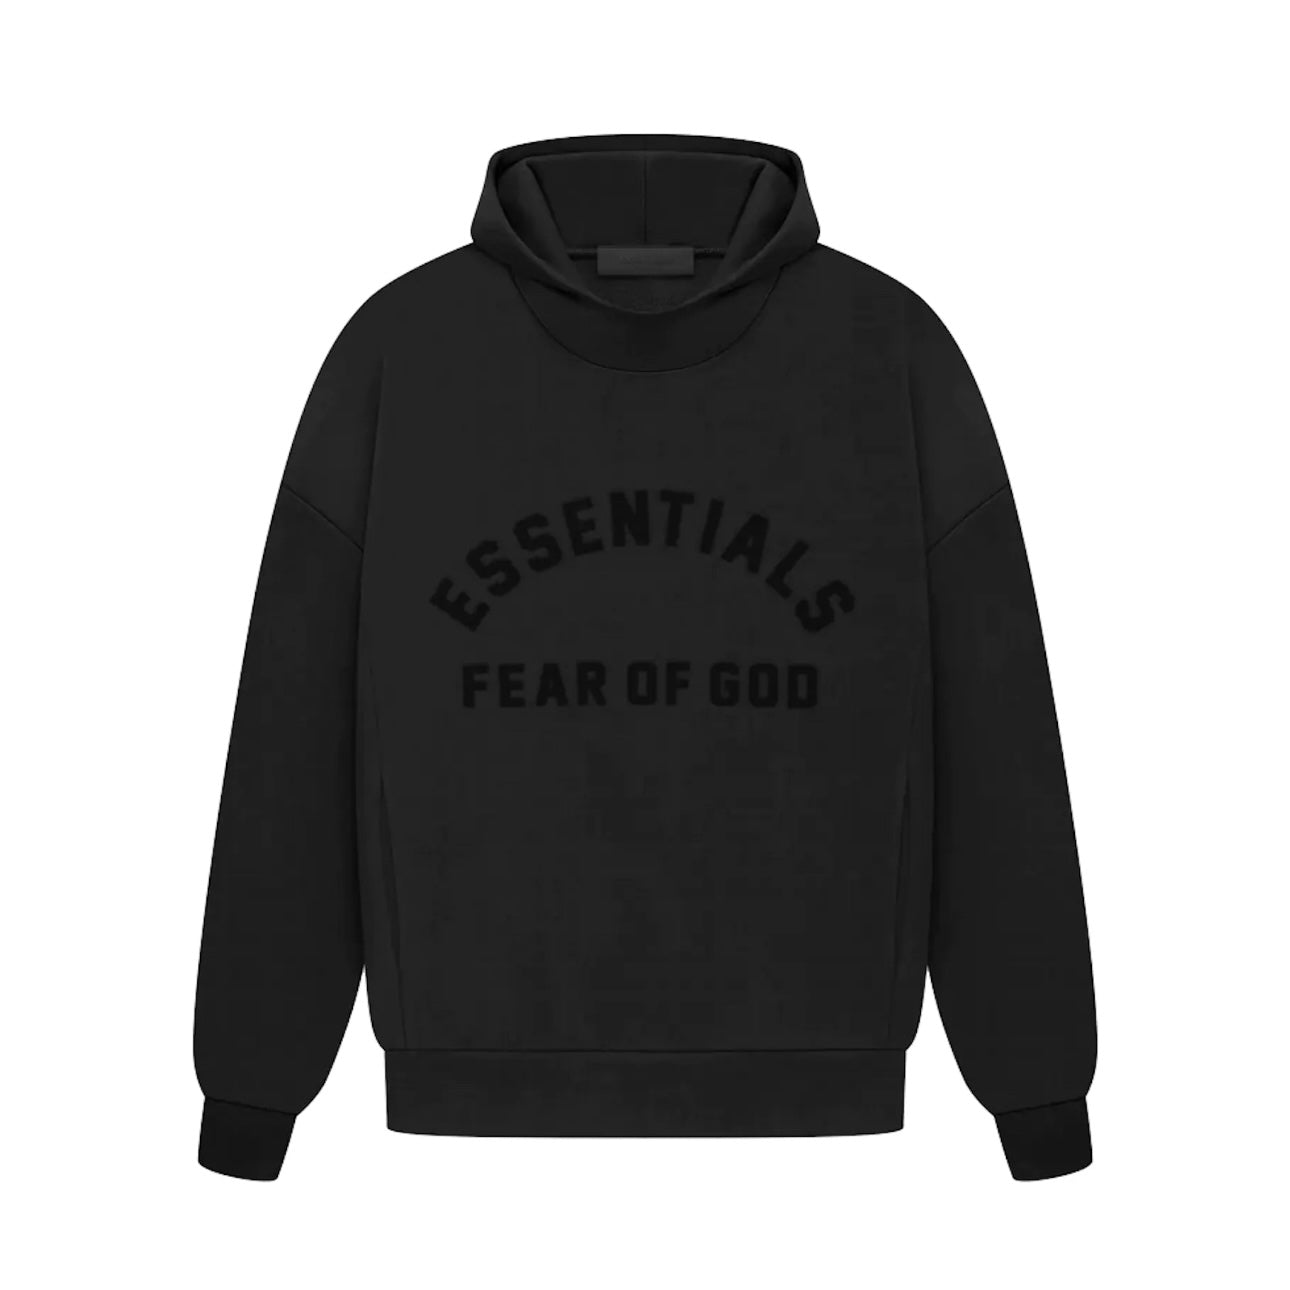 FEAR OF GOD ESSENTIALS HOODIE - BLACK